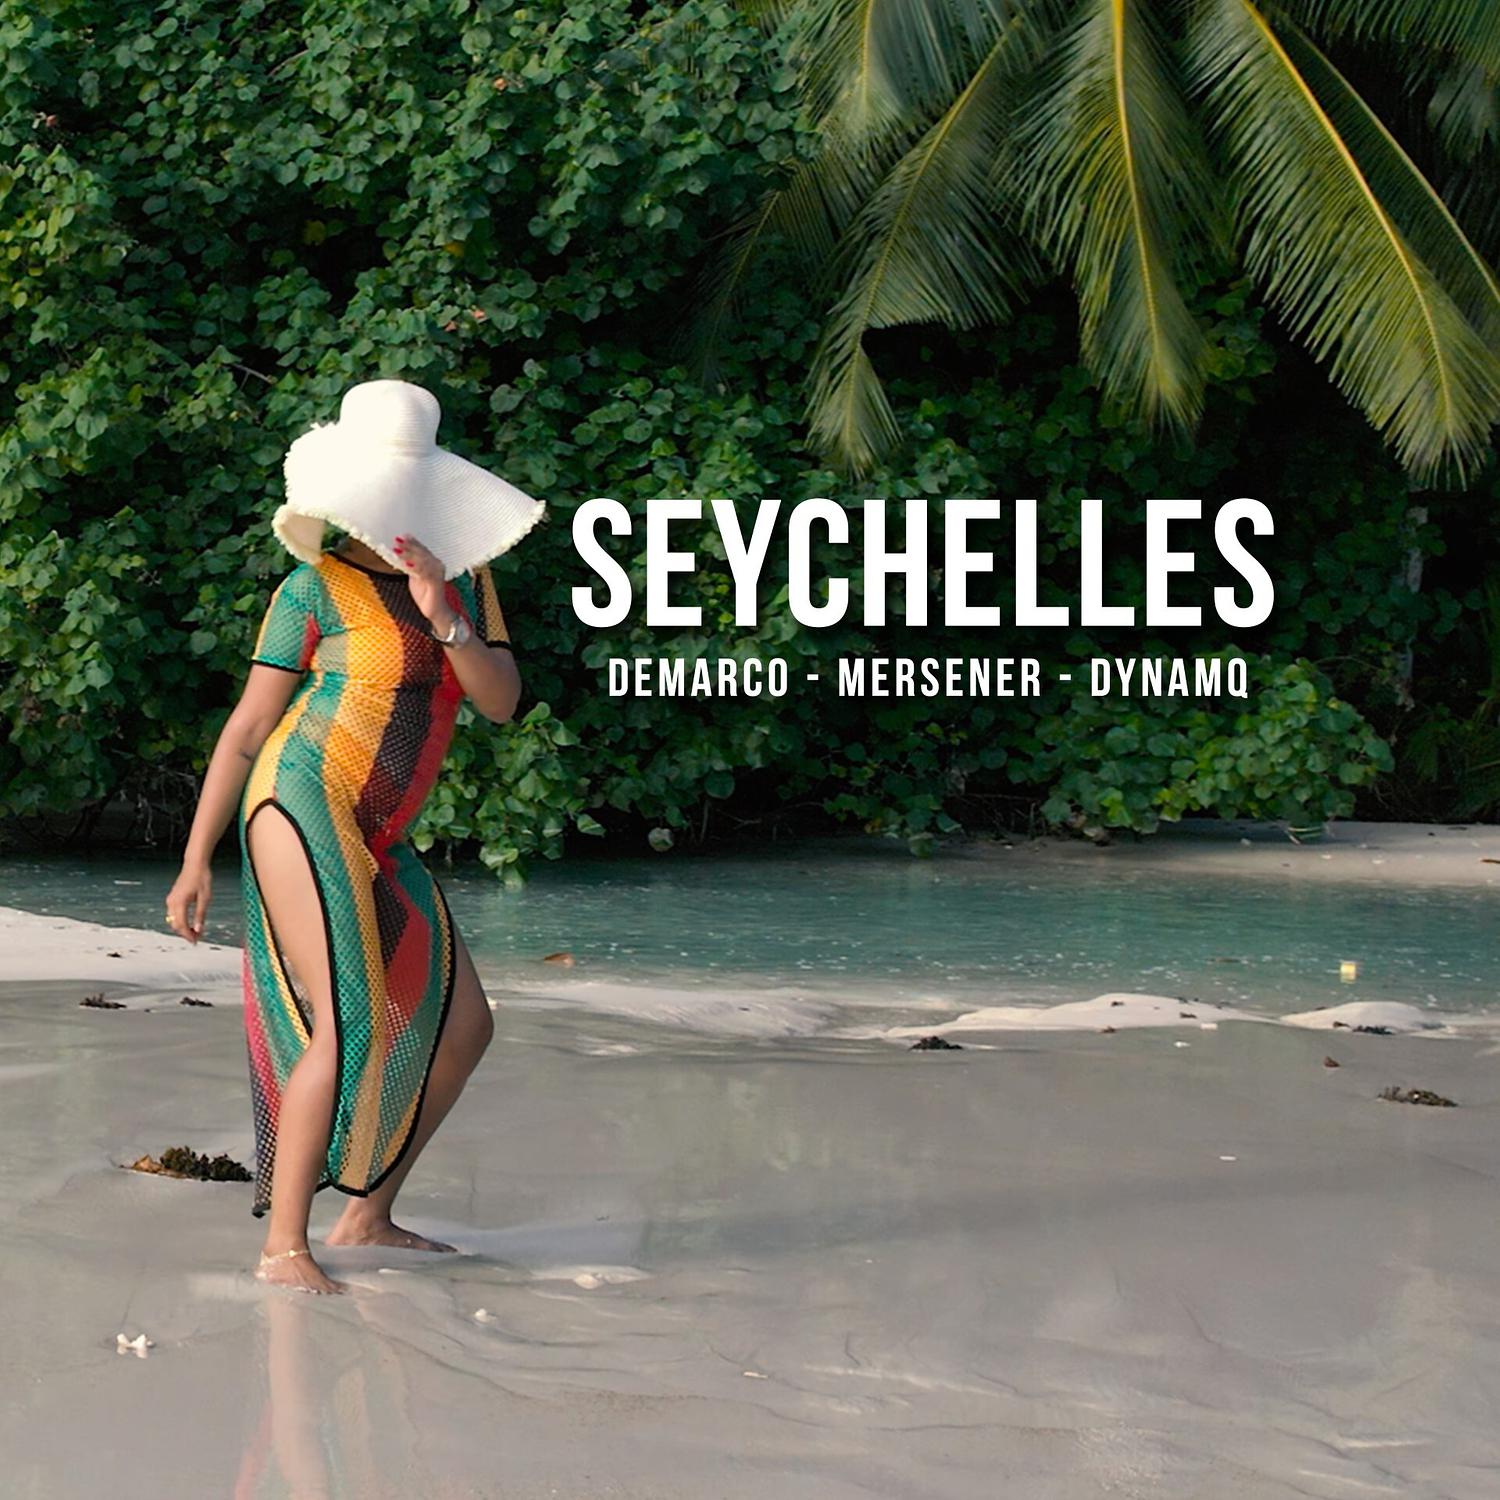 Mersener - Seychelles